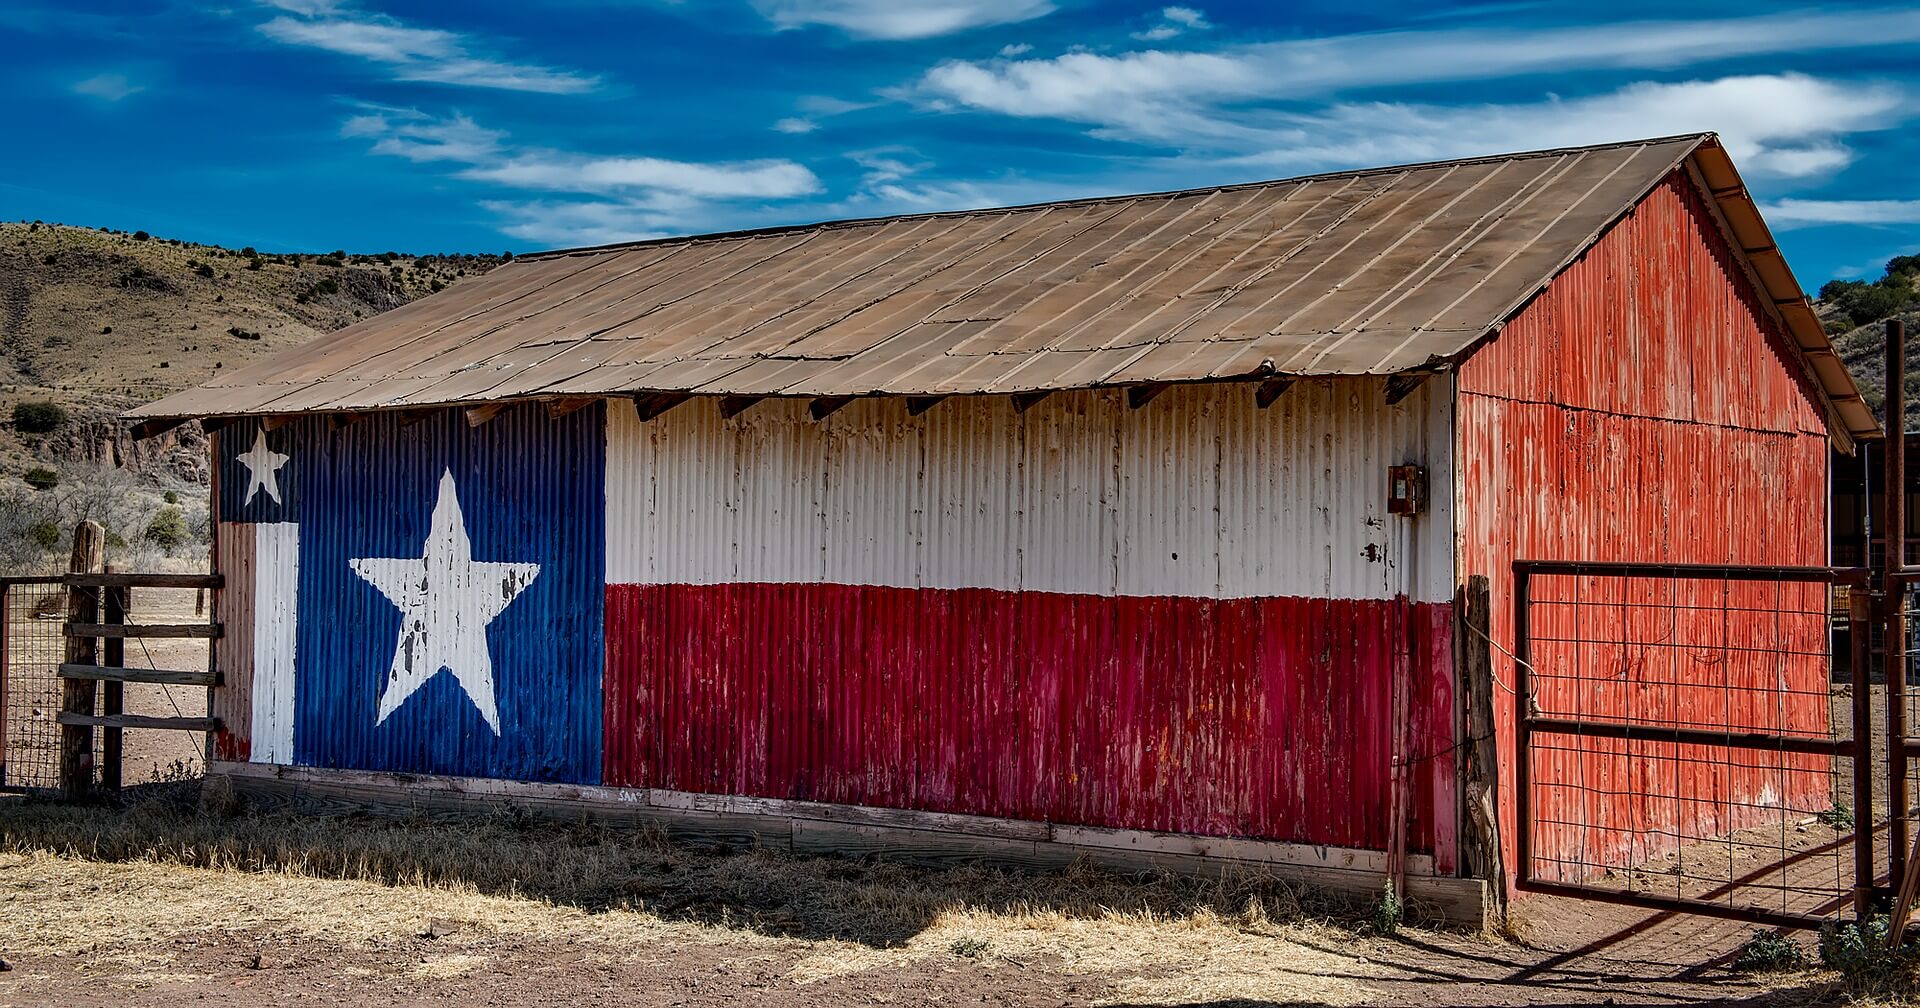 Texas flag on the side of an old barn.